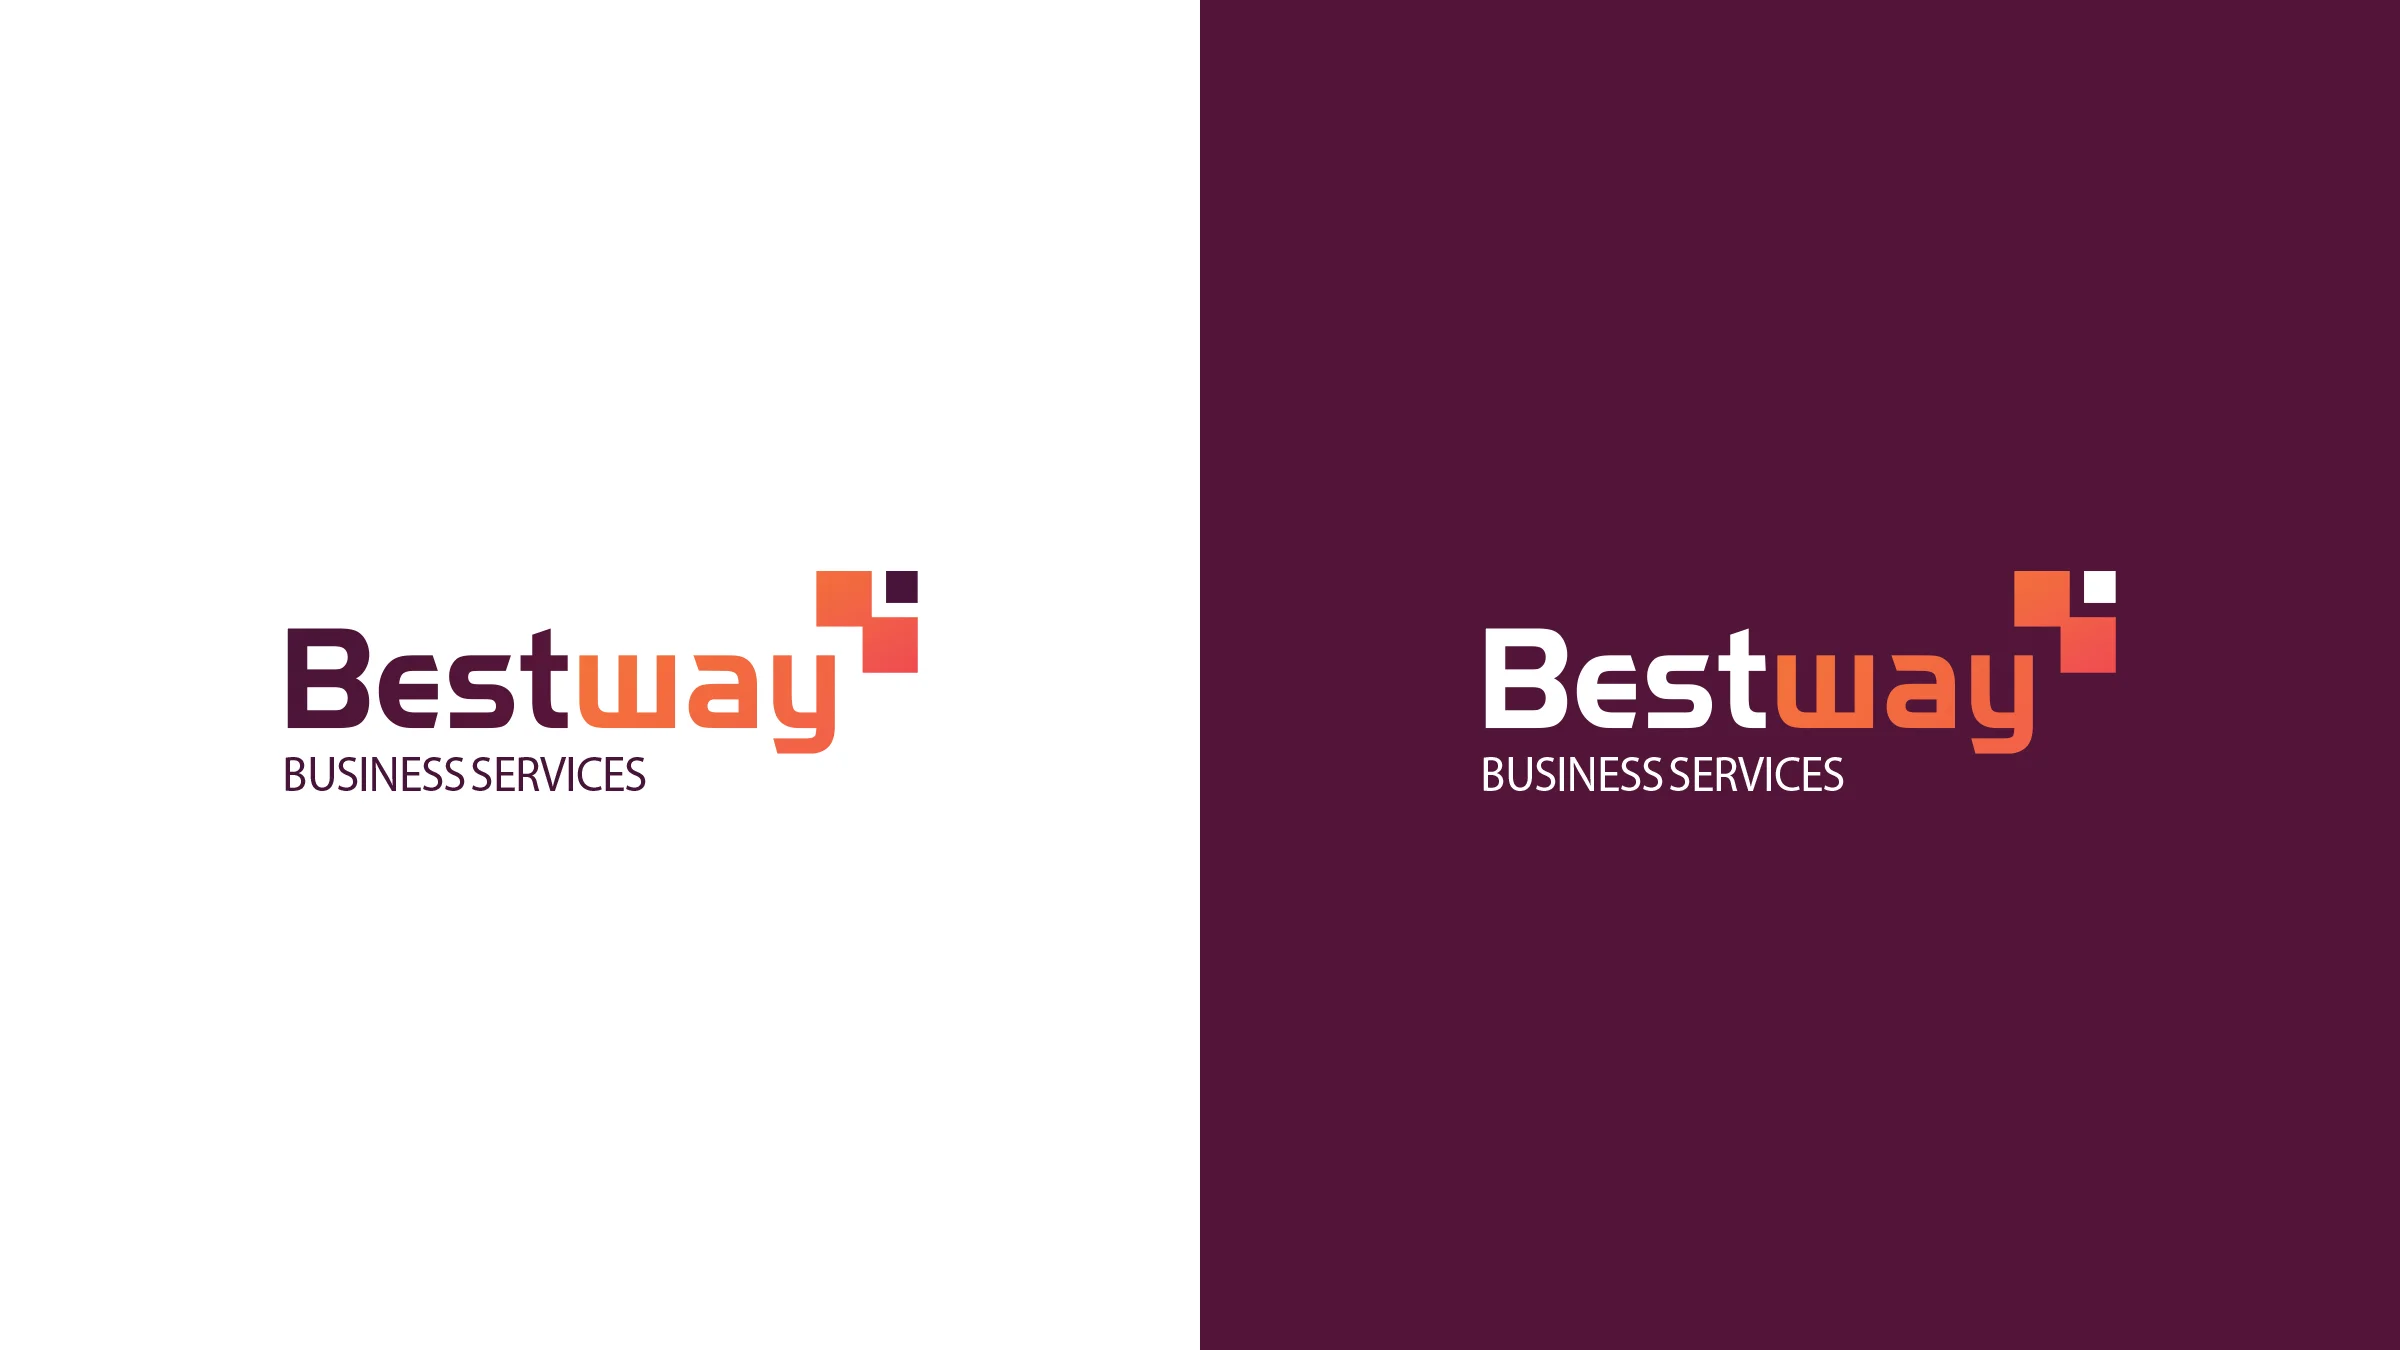 Elements Bestway Business Services